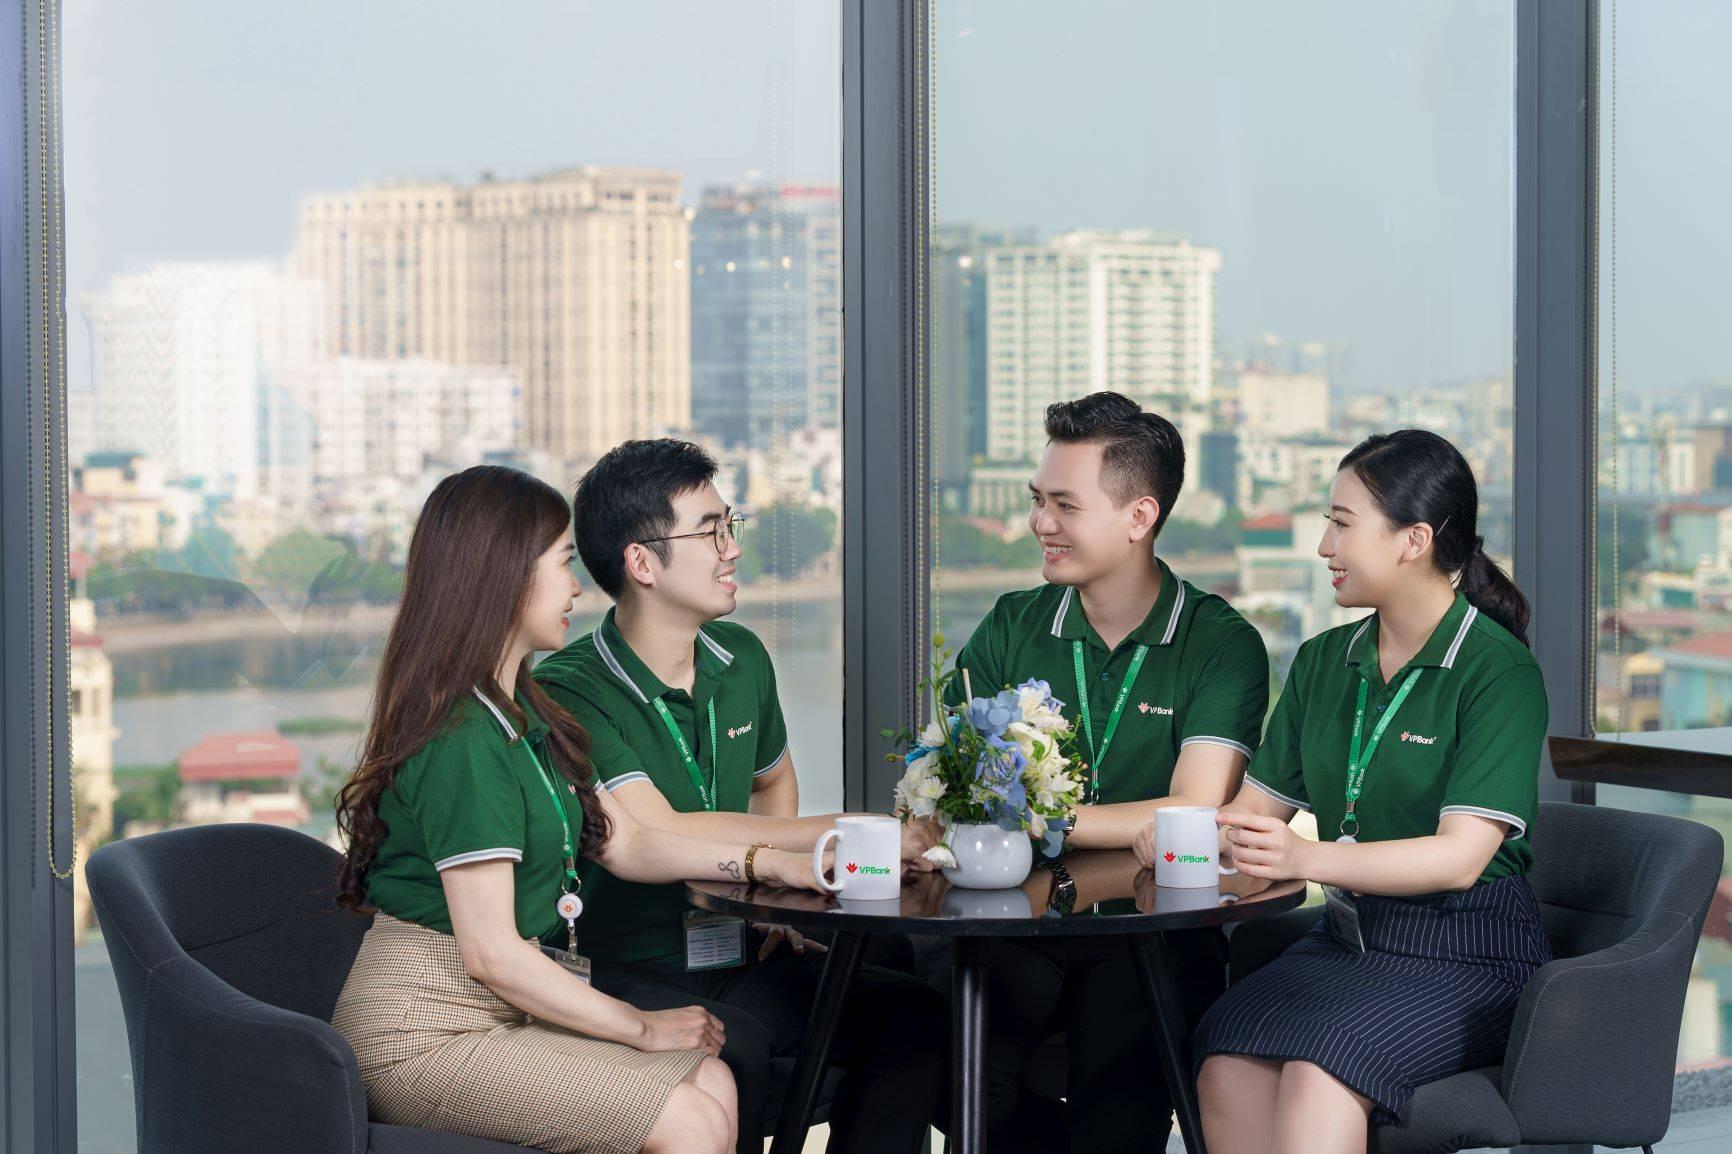 Latest VPBank - Https://tuyendung.vpbank.com.vn/ employment/hiring with high salary & attractive benefits